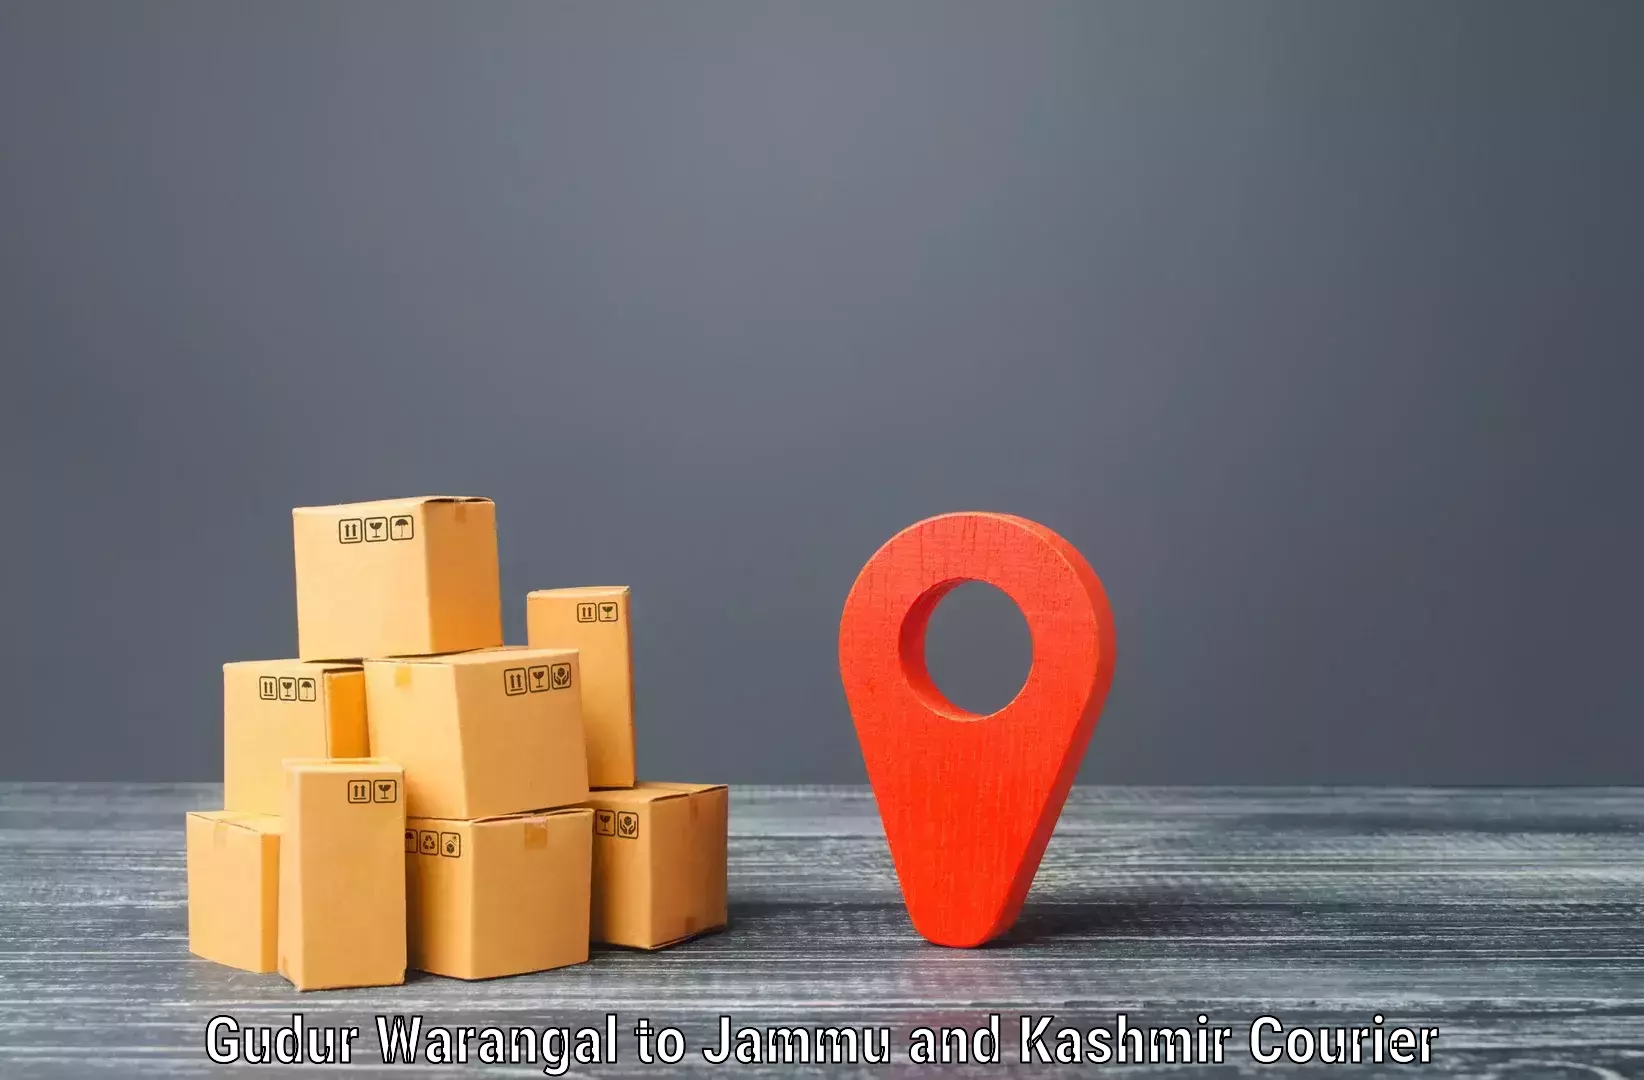 International parcel service Gudur Warangal to Doda